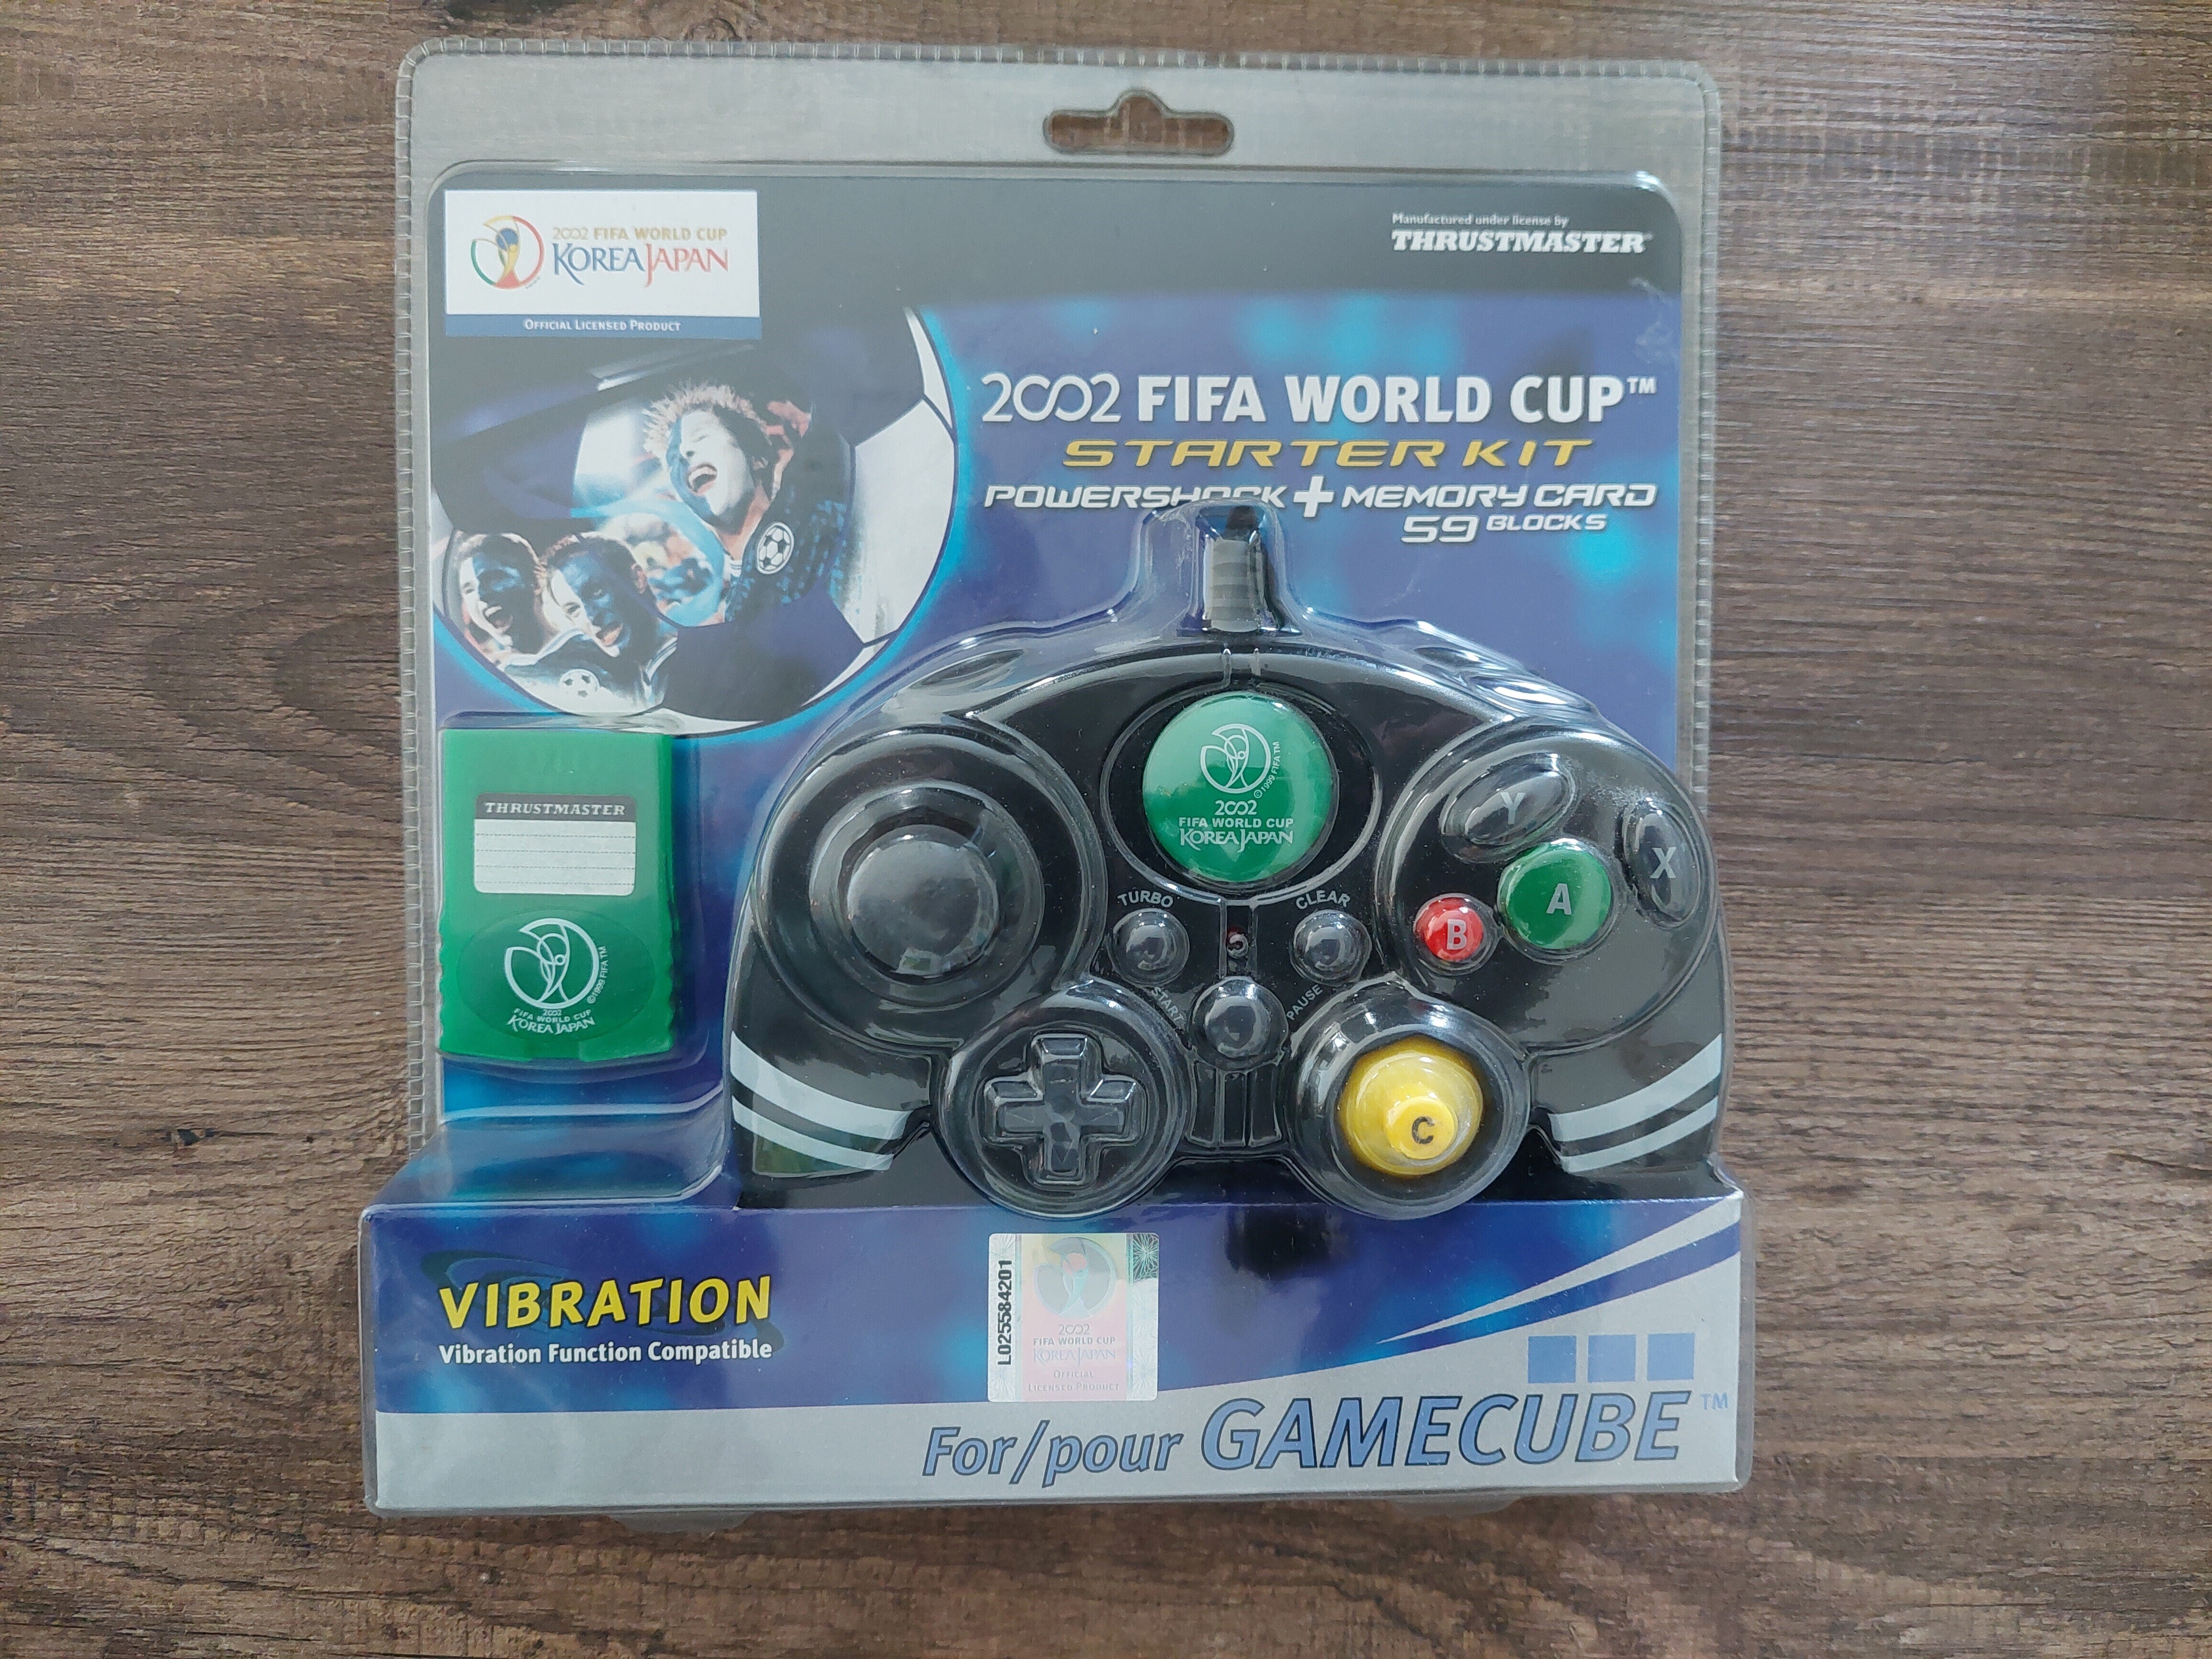  Thrustmaster Gamecube 2002 FIFA World Cup Starter Kit Controller